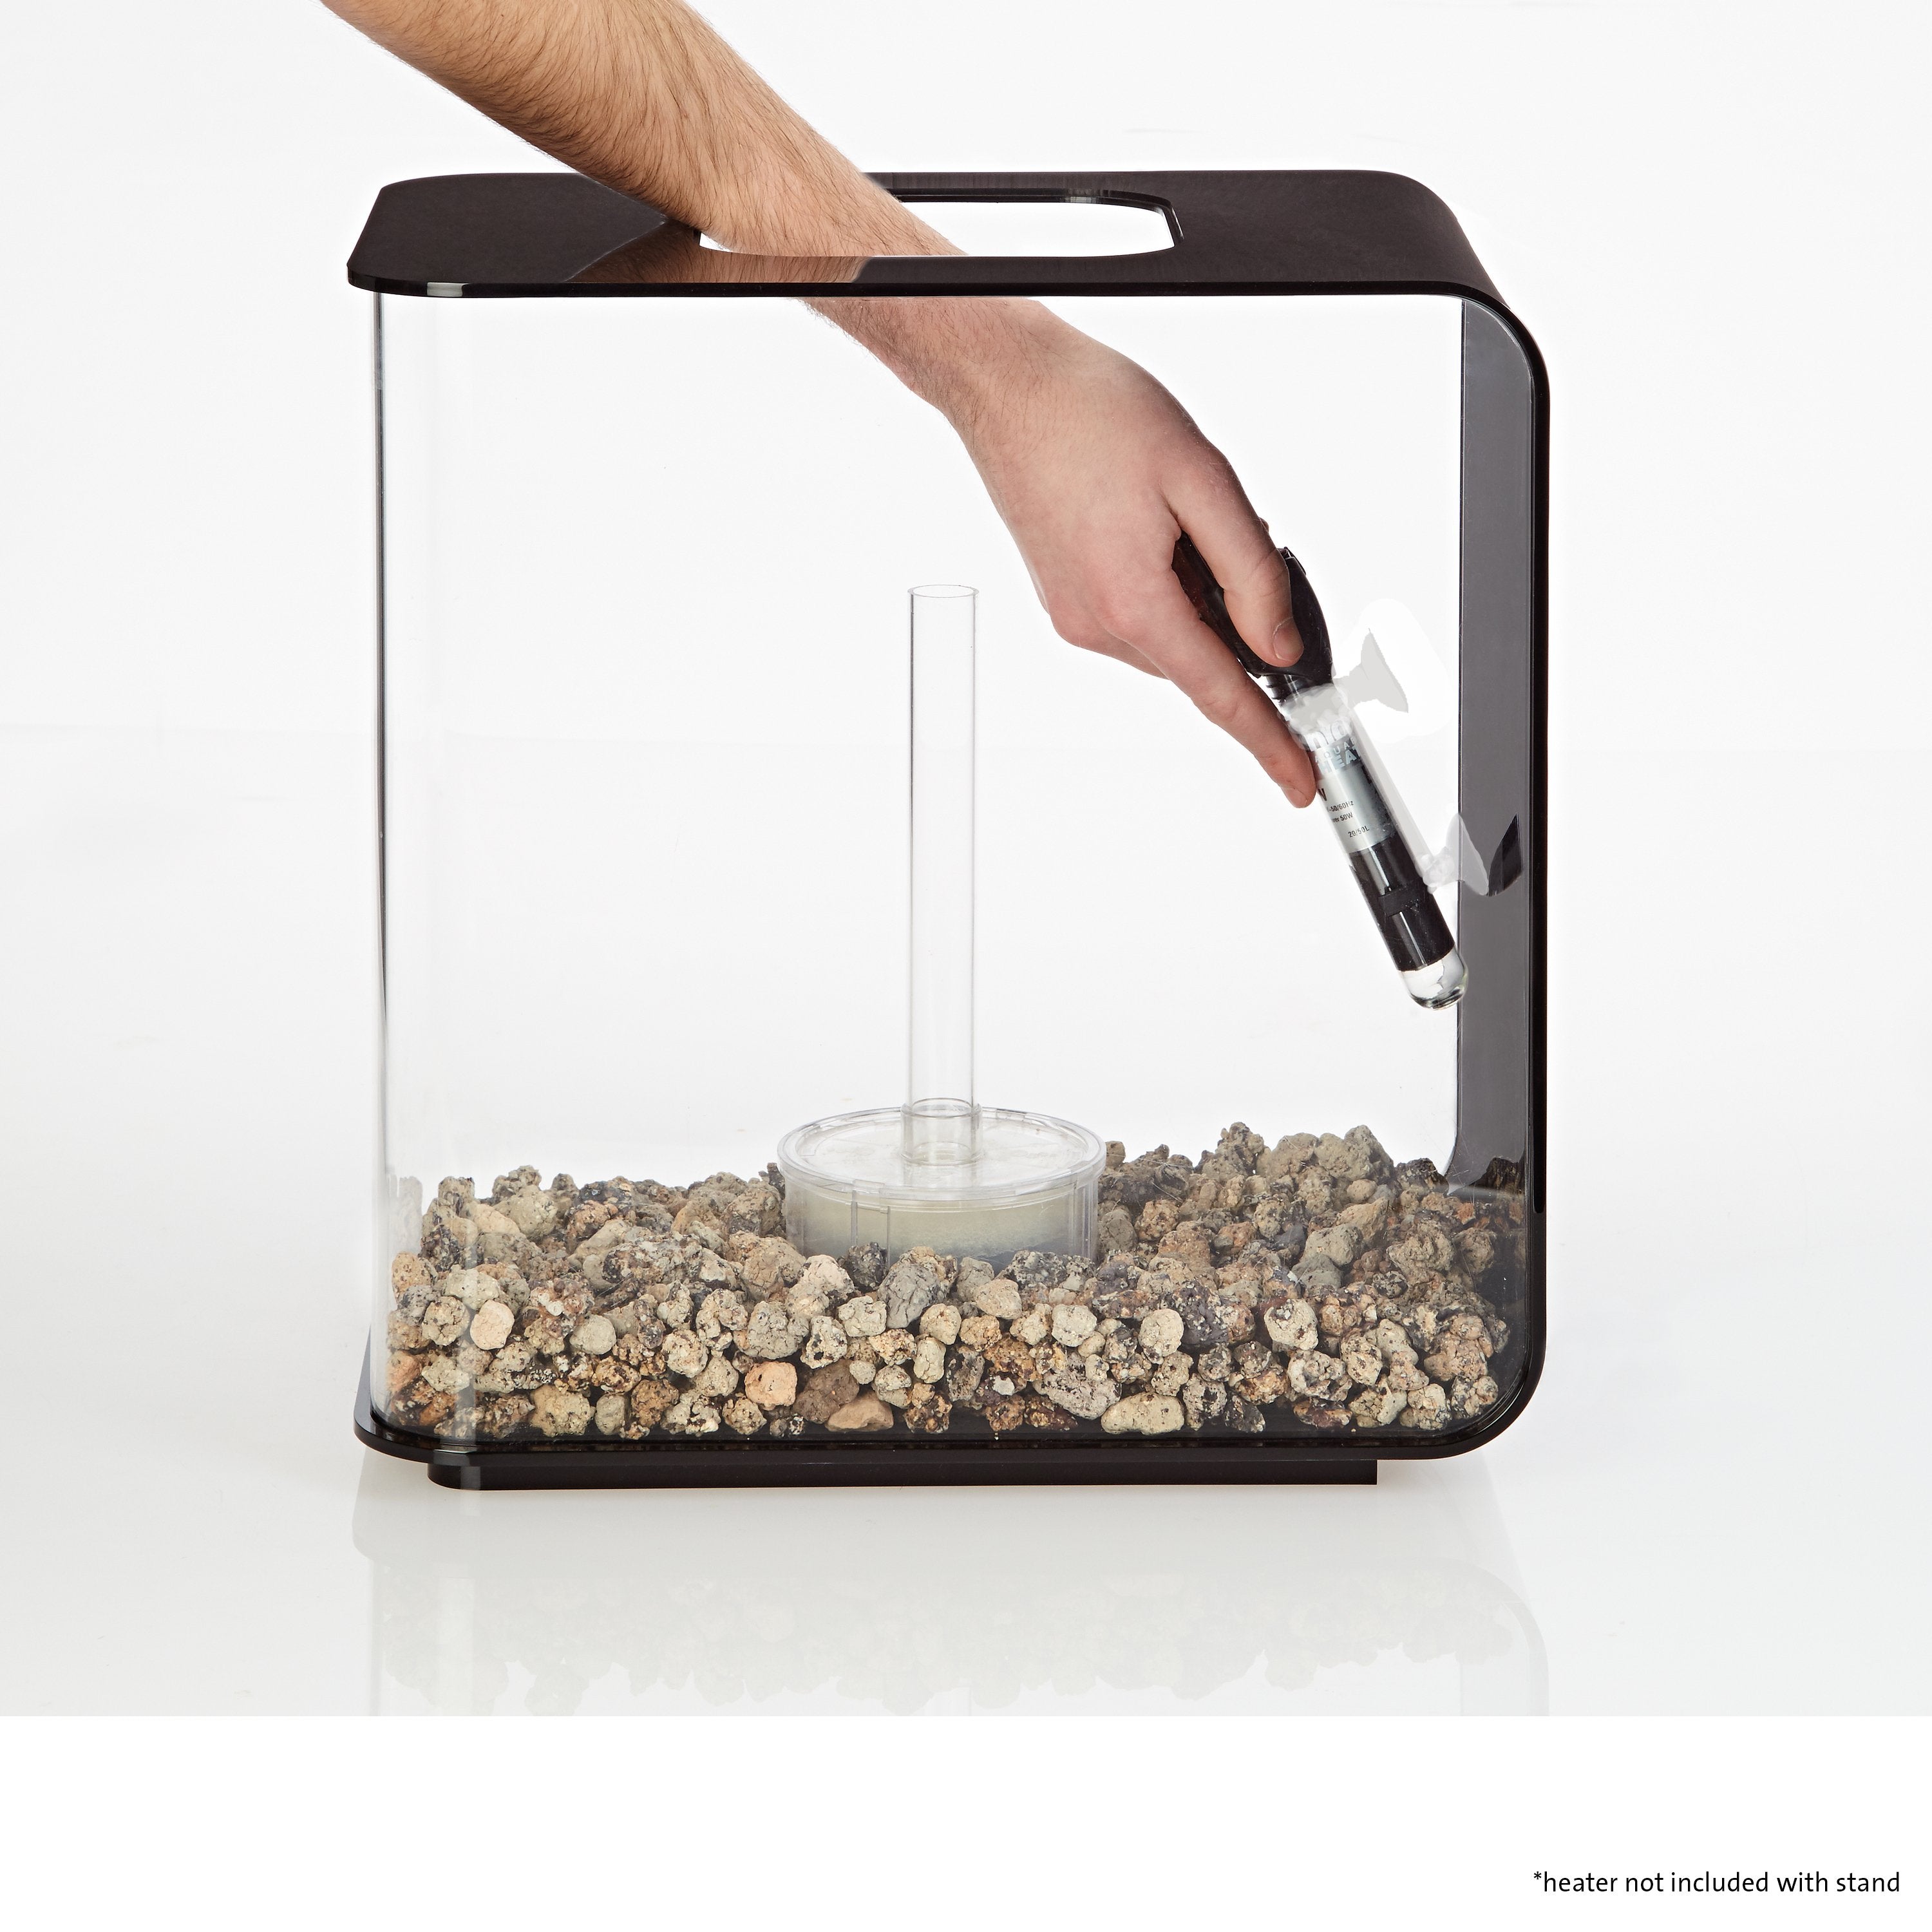 Install the biOrb Aquarium Heater Stand to the side of your aquarium